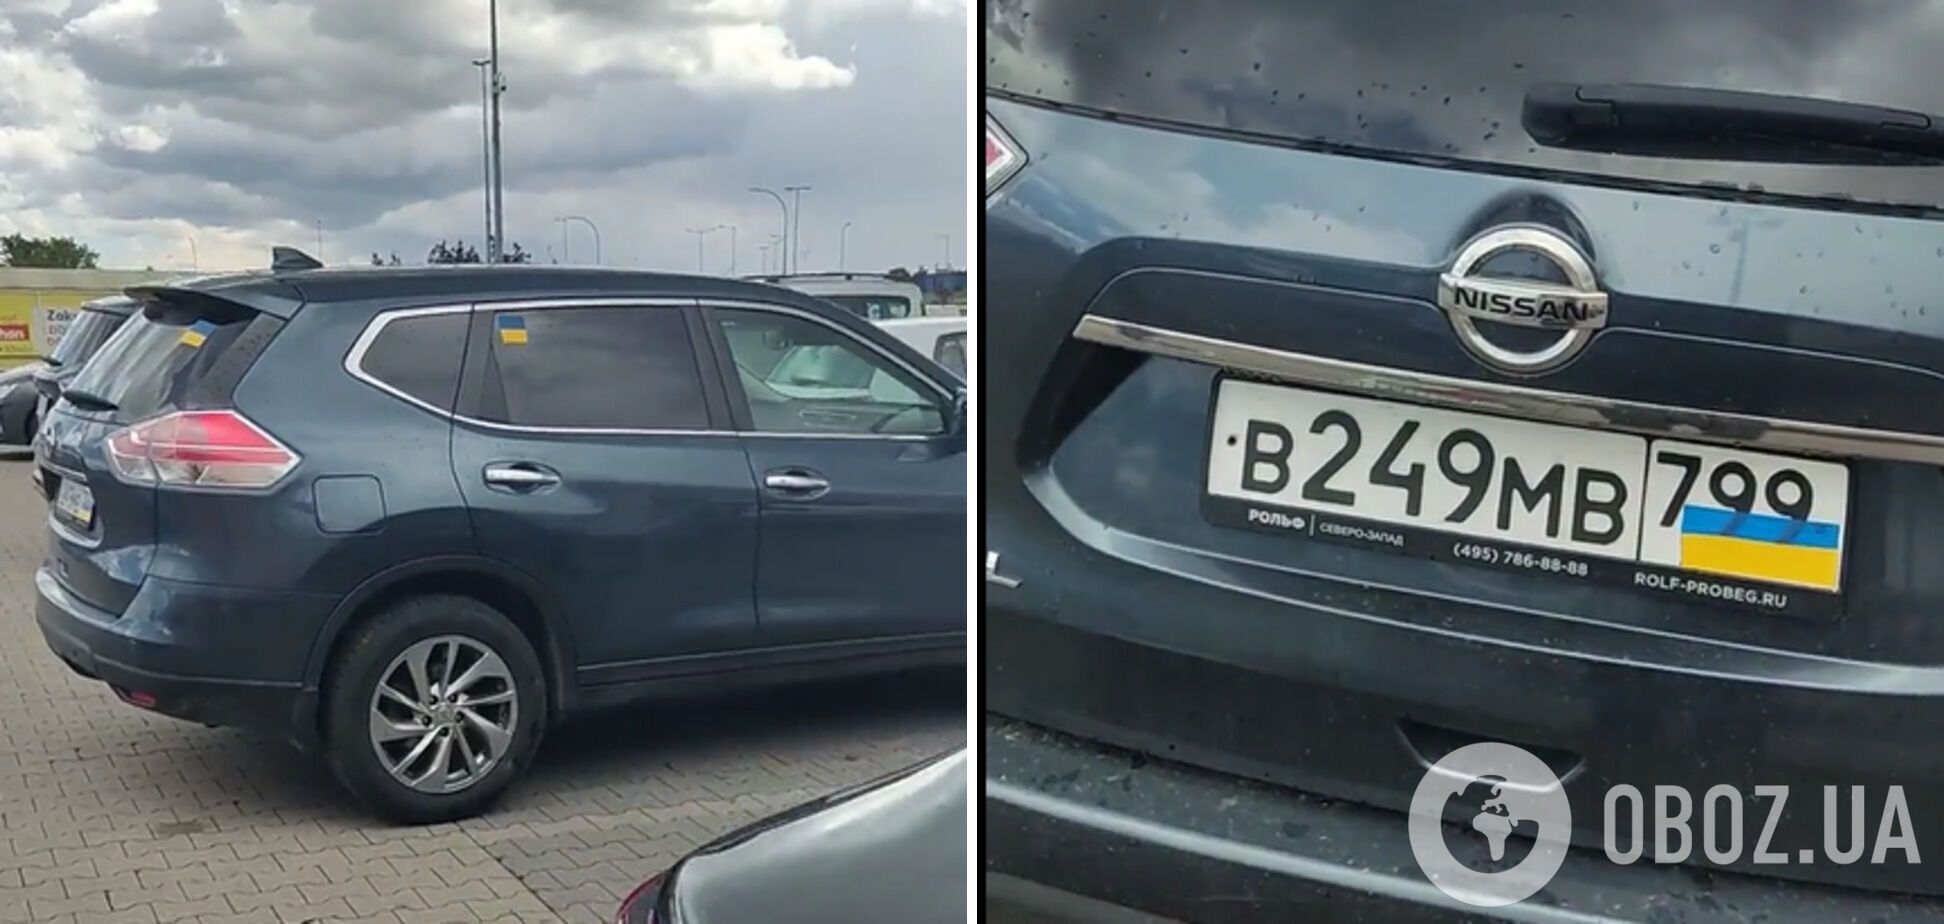 Росіяни у Польщі заклеюють свій прапор на номерах машин українським